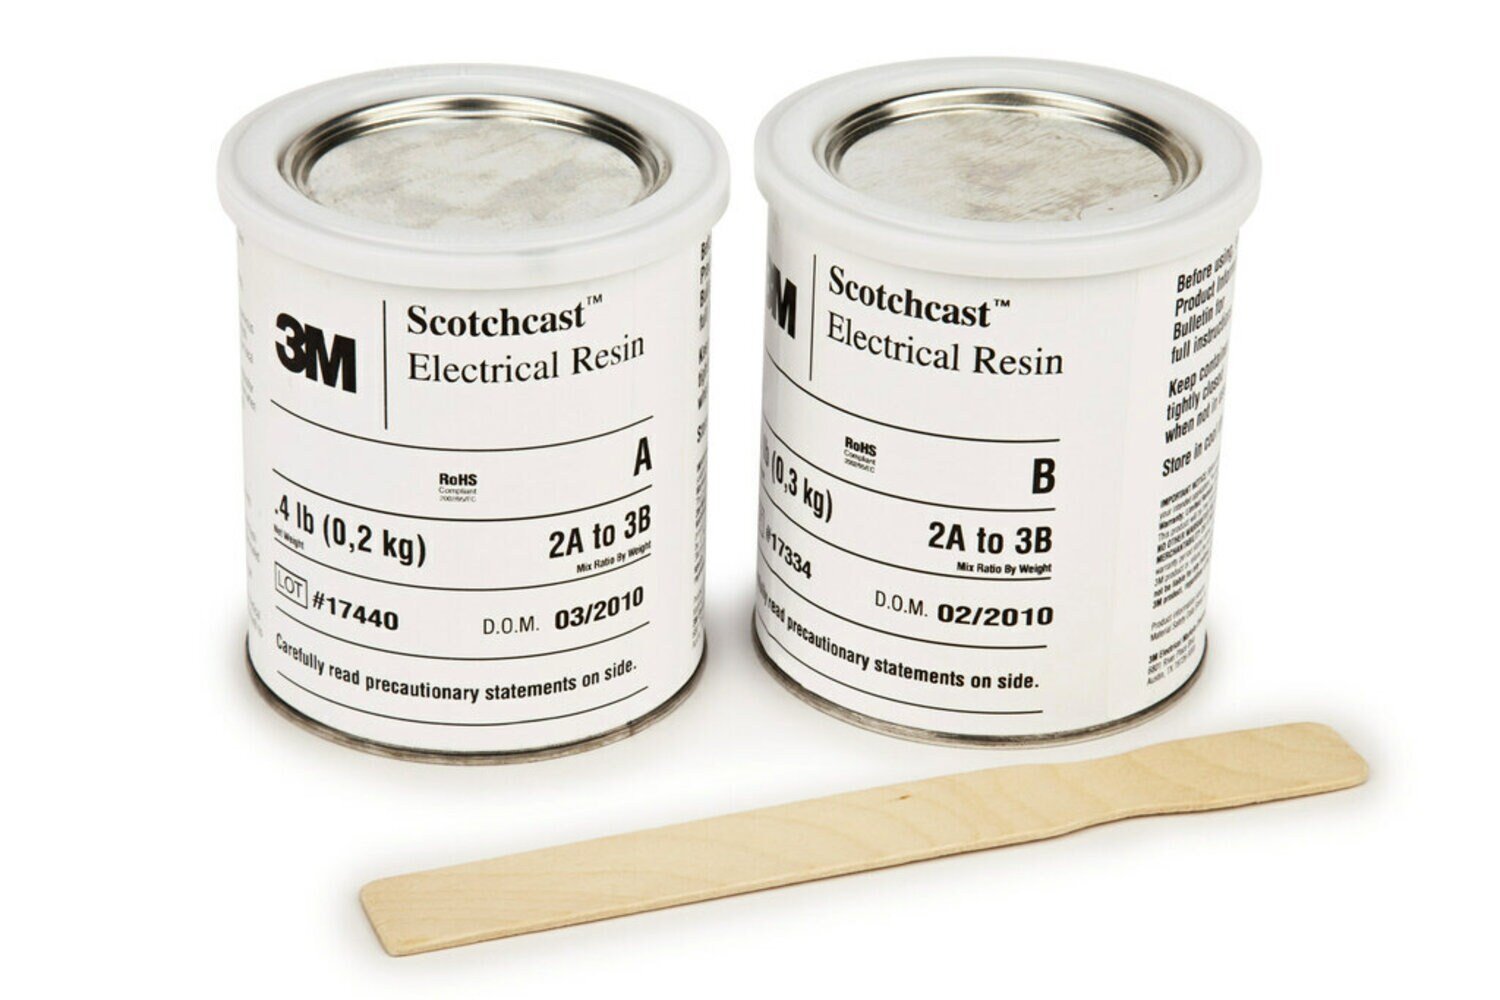 7100083219 - 3M Scotchcast Electrical Resin 255 (18 lb), 1 Kits/Case